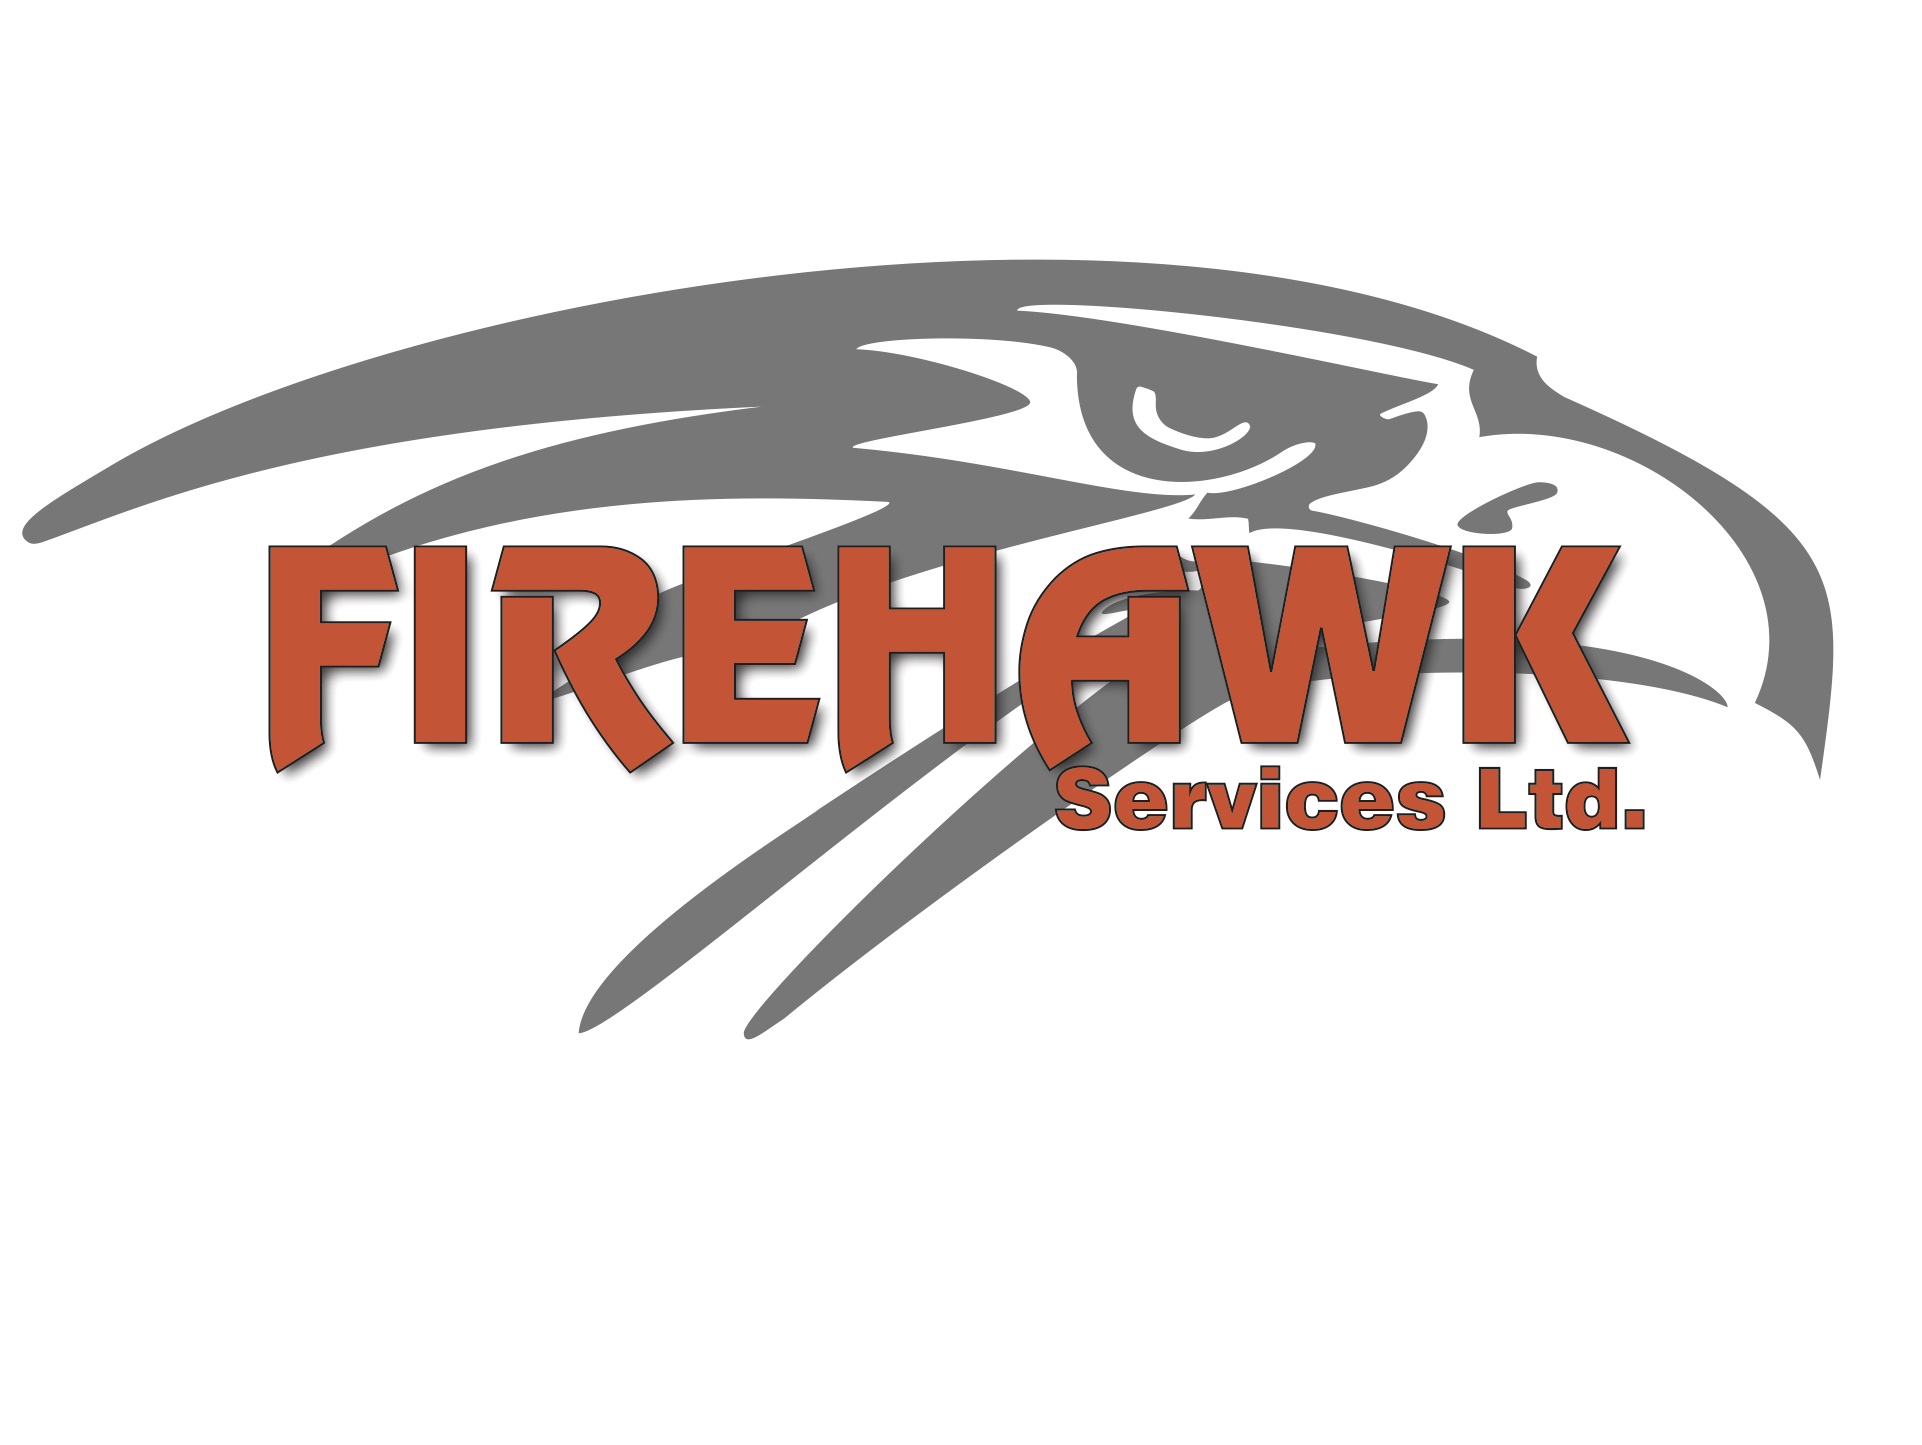 Firehawk Services Ltd.